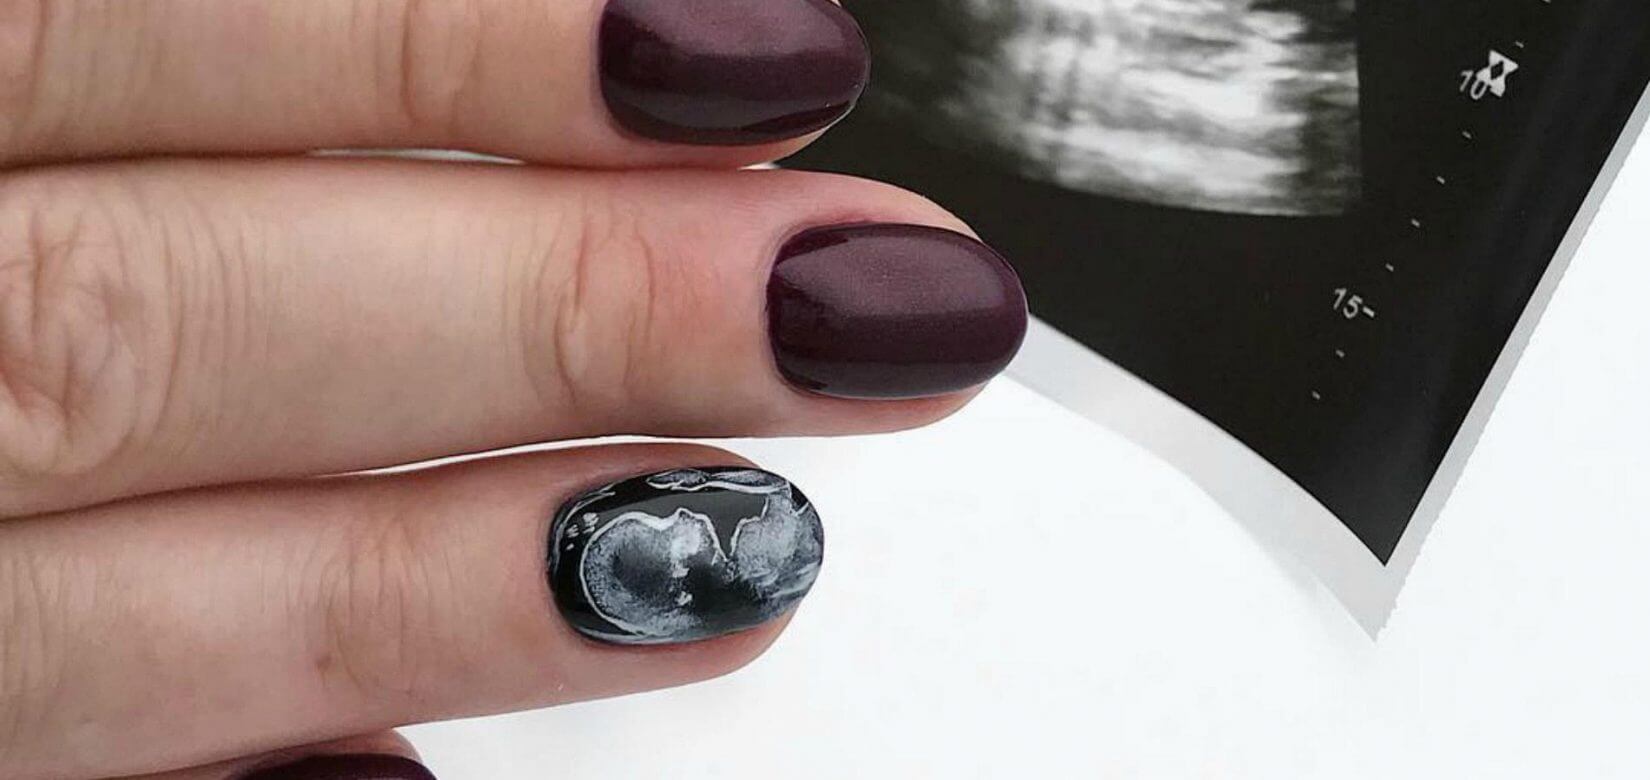 Sonogram nail art: Η νέα μόδα στα νύχια για τις μέλλουσες μανούλες!